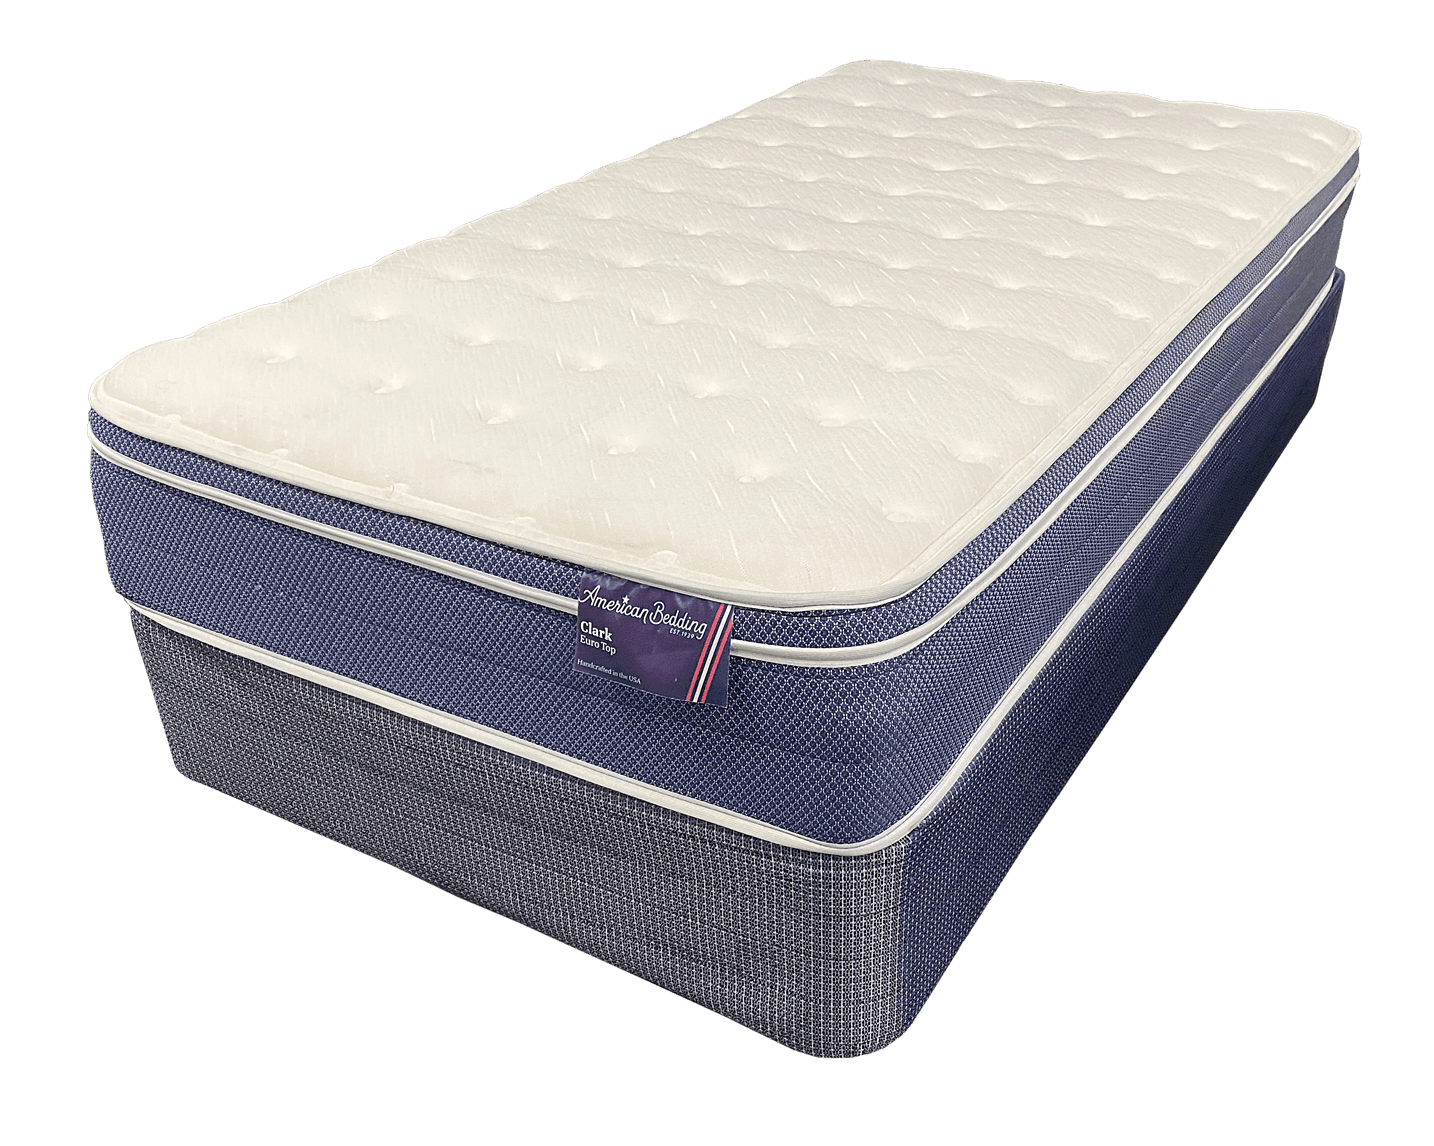 American bedding clark mattress